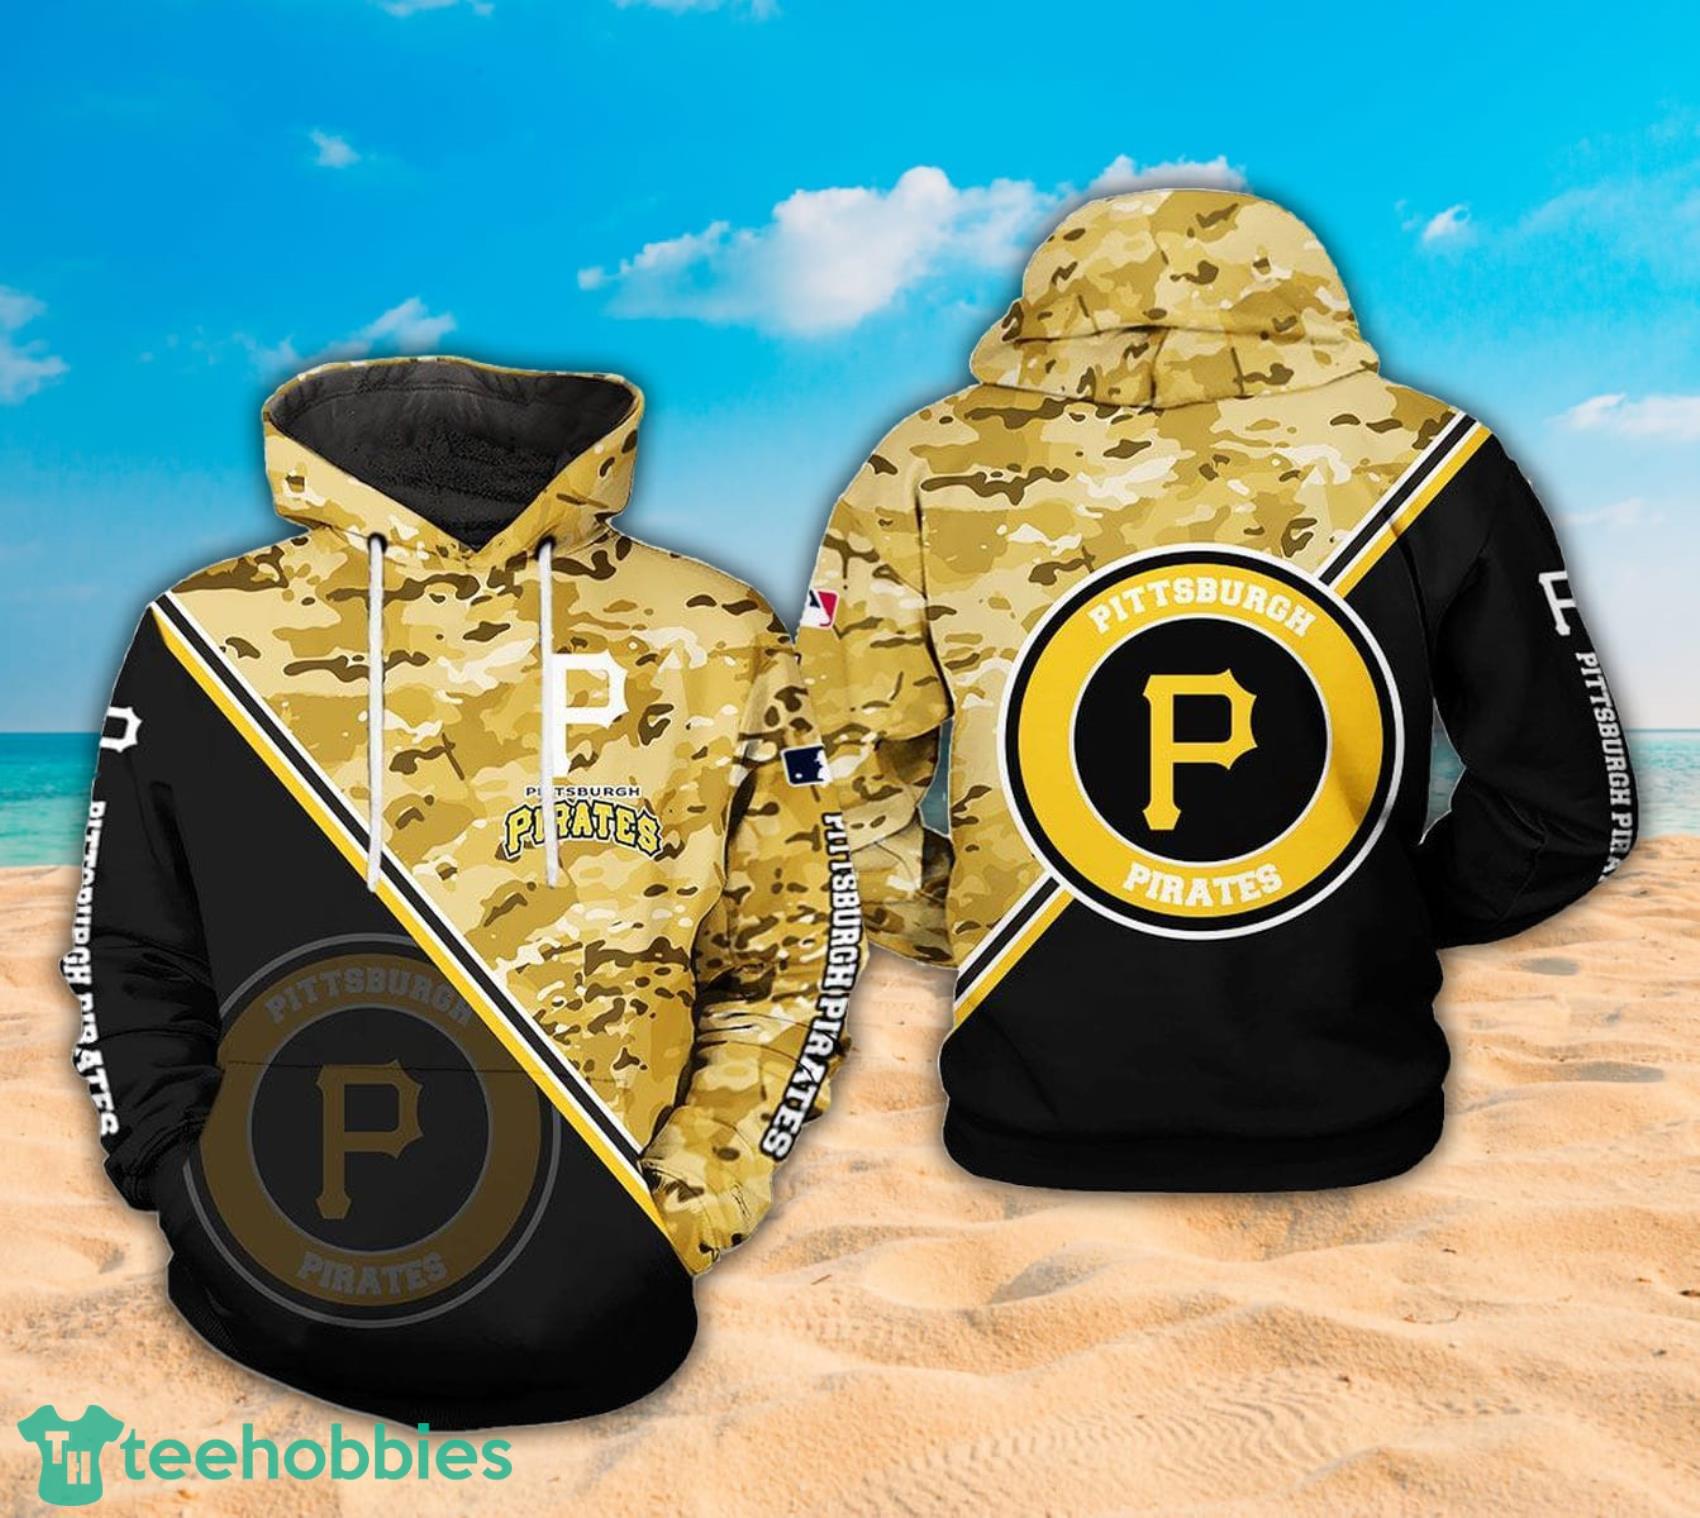 Custom Pittsburgh Pirate Shirts For Mens 3D Hunting Camo